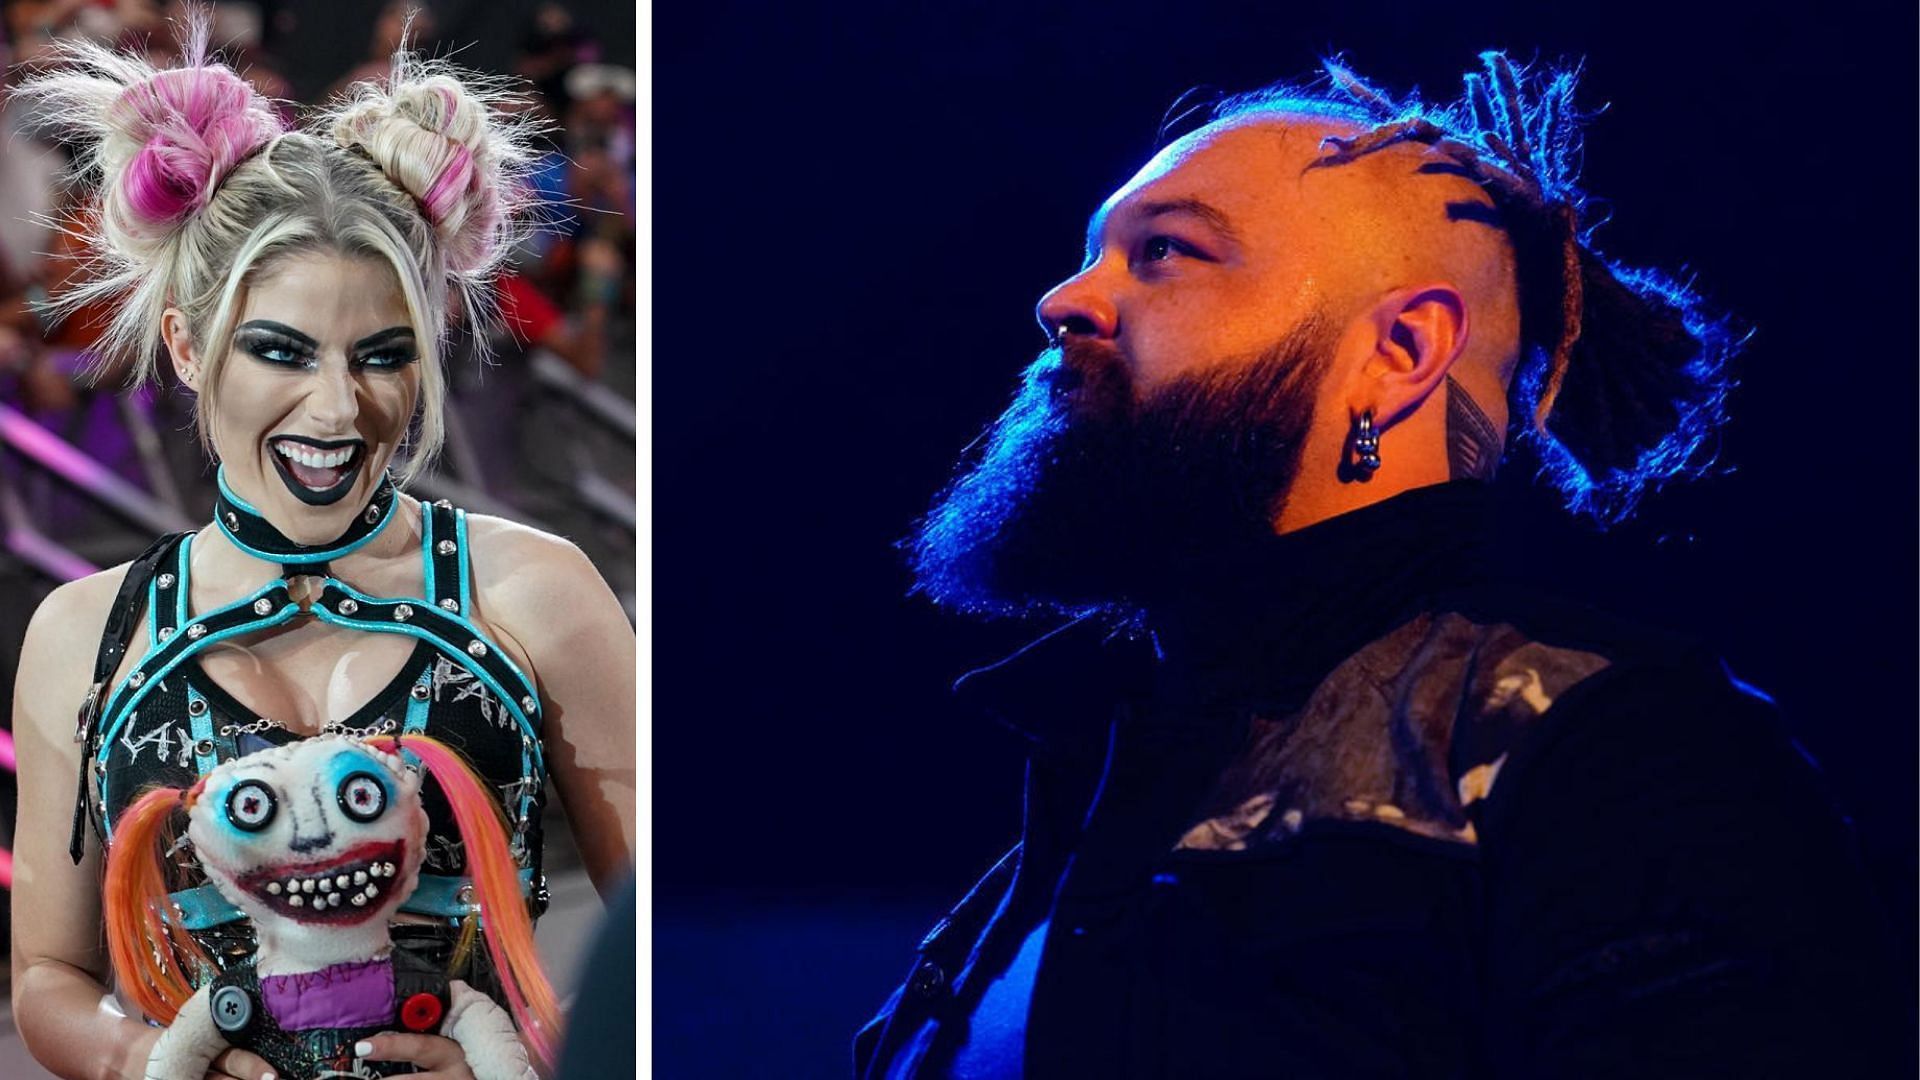 Alexa Bliss and Bray Wyatt were once friends in WWE.